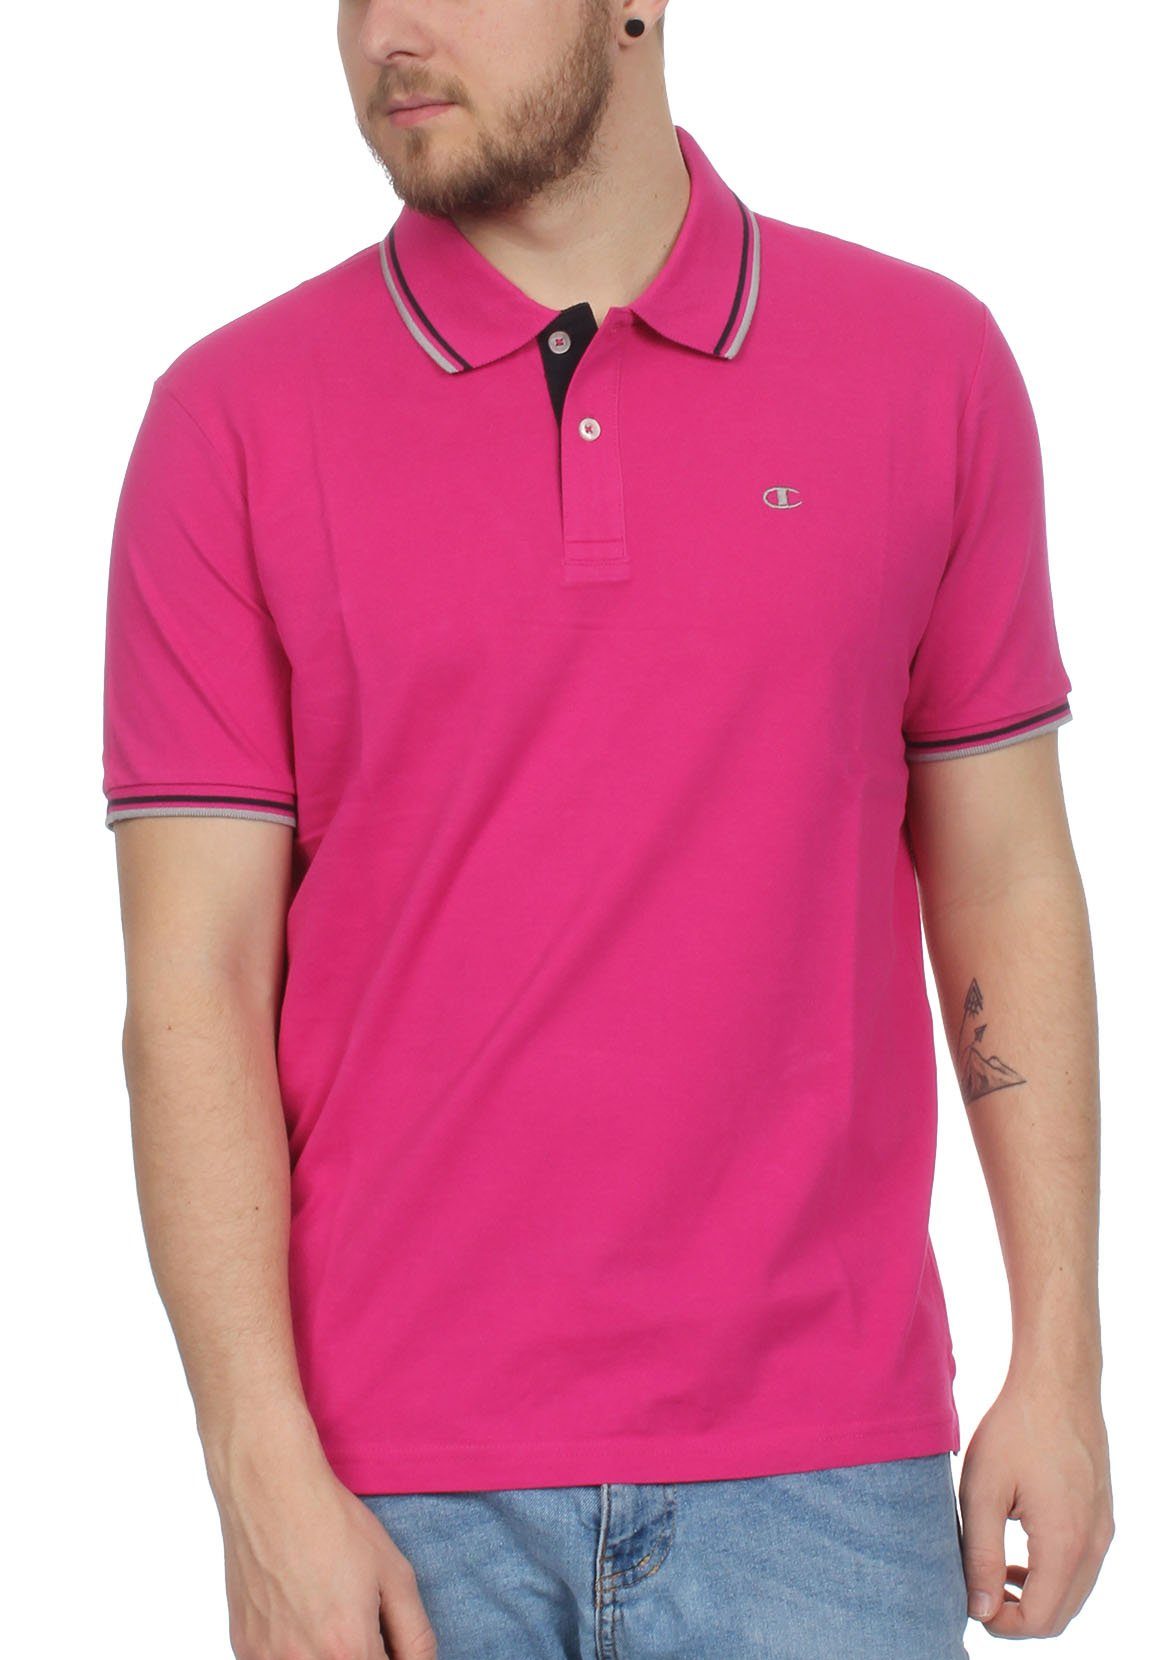 Champion Poloshirt Poloshirt 211847 pink S21 Champion Authletic Herren